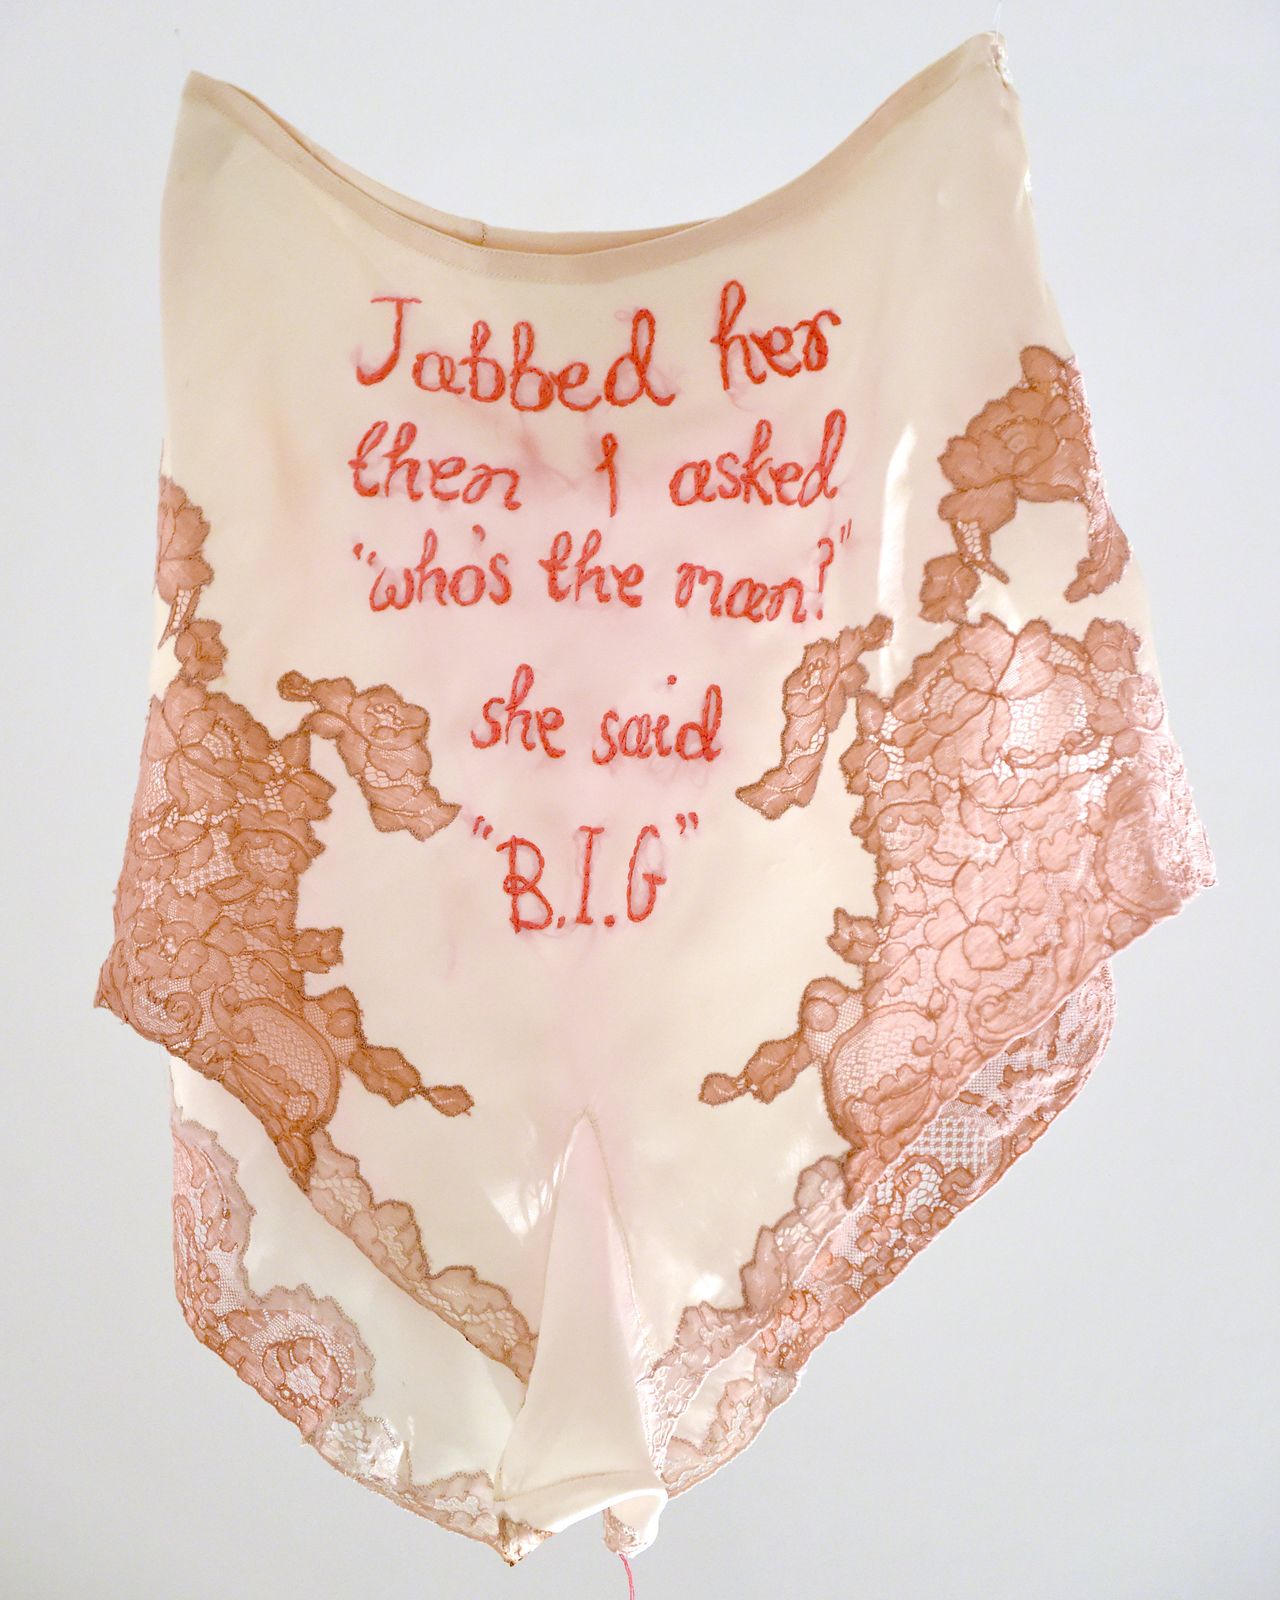 Feminist Artist Embroidered Rap Lyrics Onto Lingerie To Start A